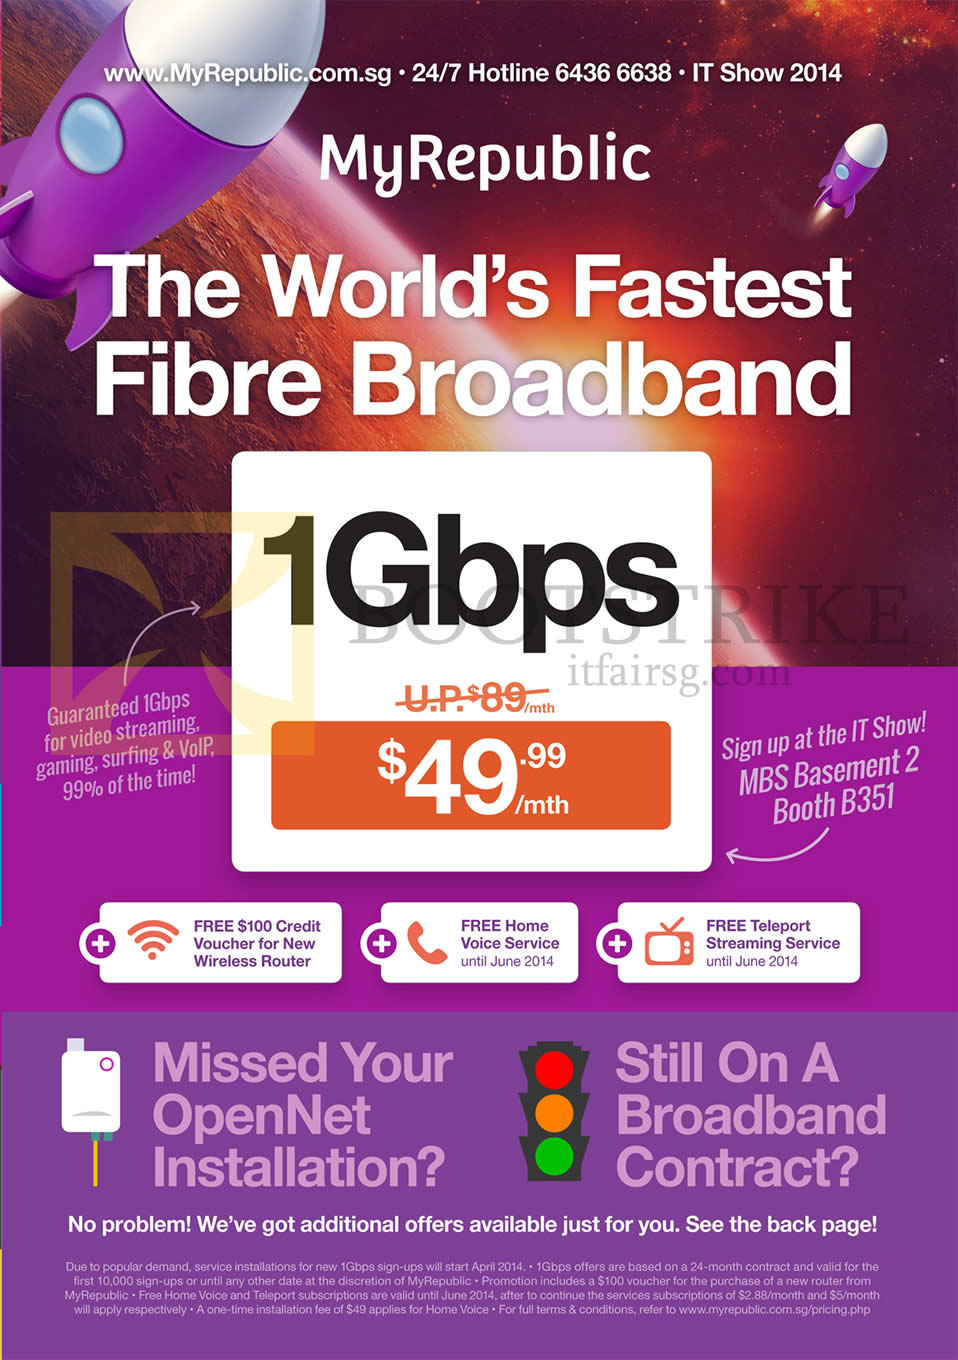 IT SHOW 2014 price list image brochure of MyRepublic Fibre Broadband 1Gbps 49.99, Free Voice, Free Teleport, Free Router Credit Voucher